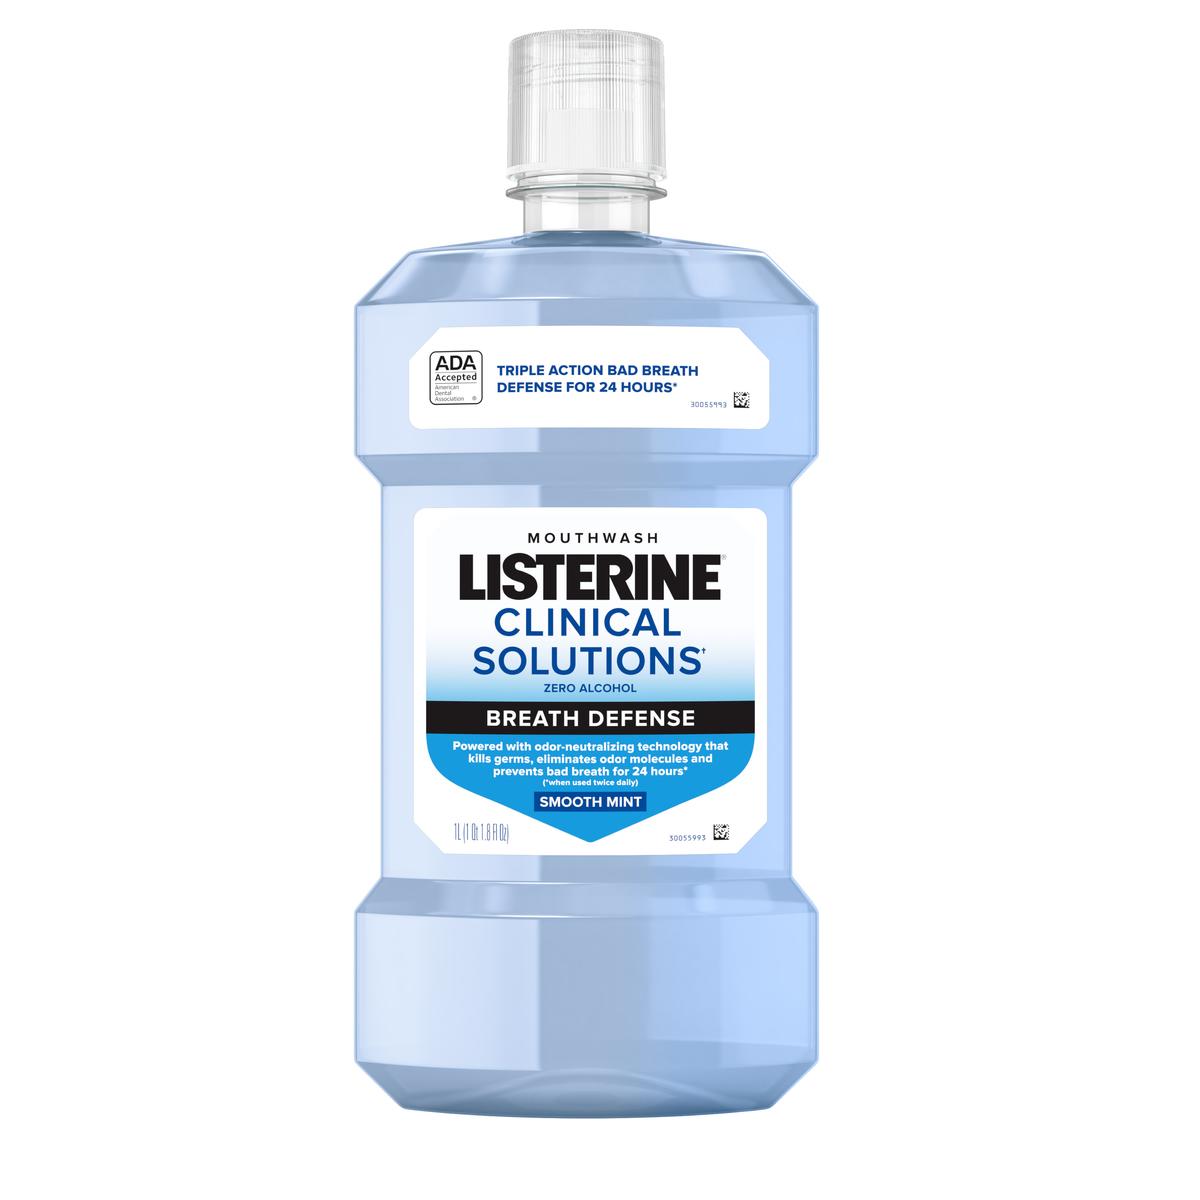 Listerine Clinical Solutions Breath Defense mouthwash bottle front